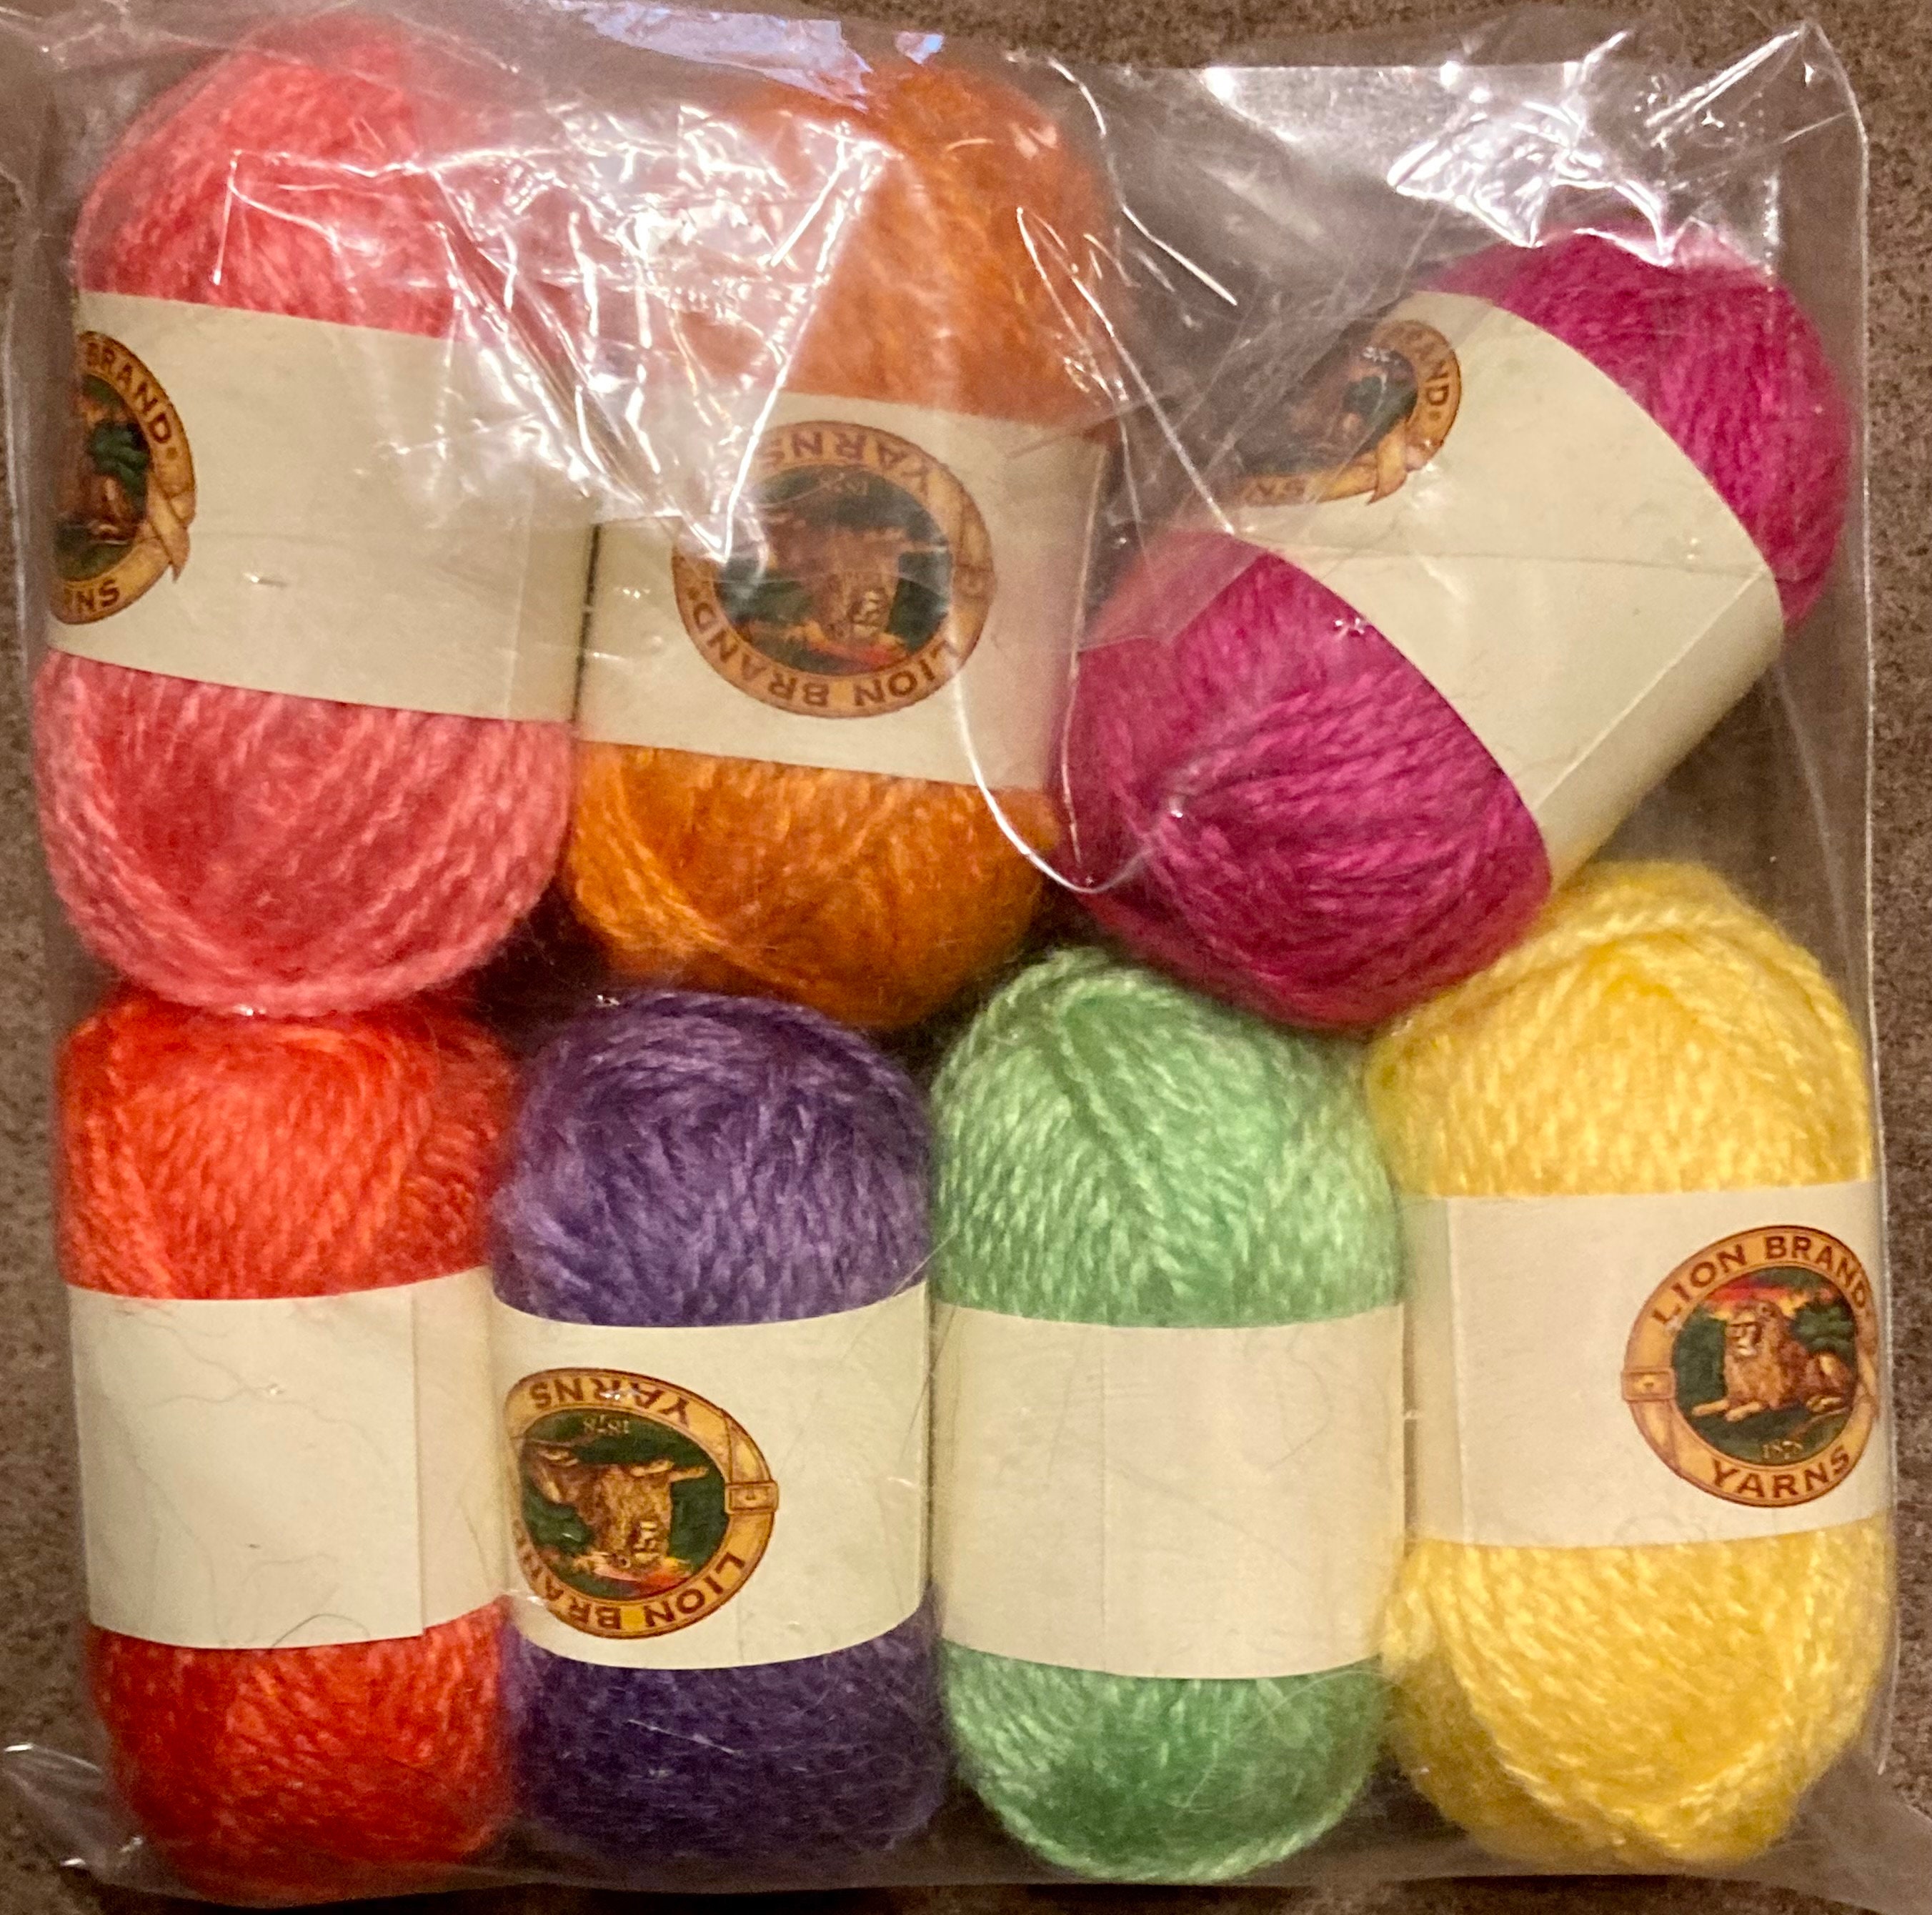 Lion Brand Yarn Bonbons Pastels Mini Yarn Variety Pack Light